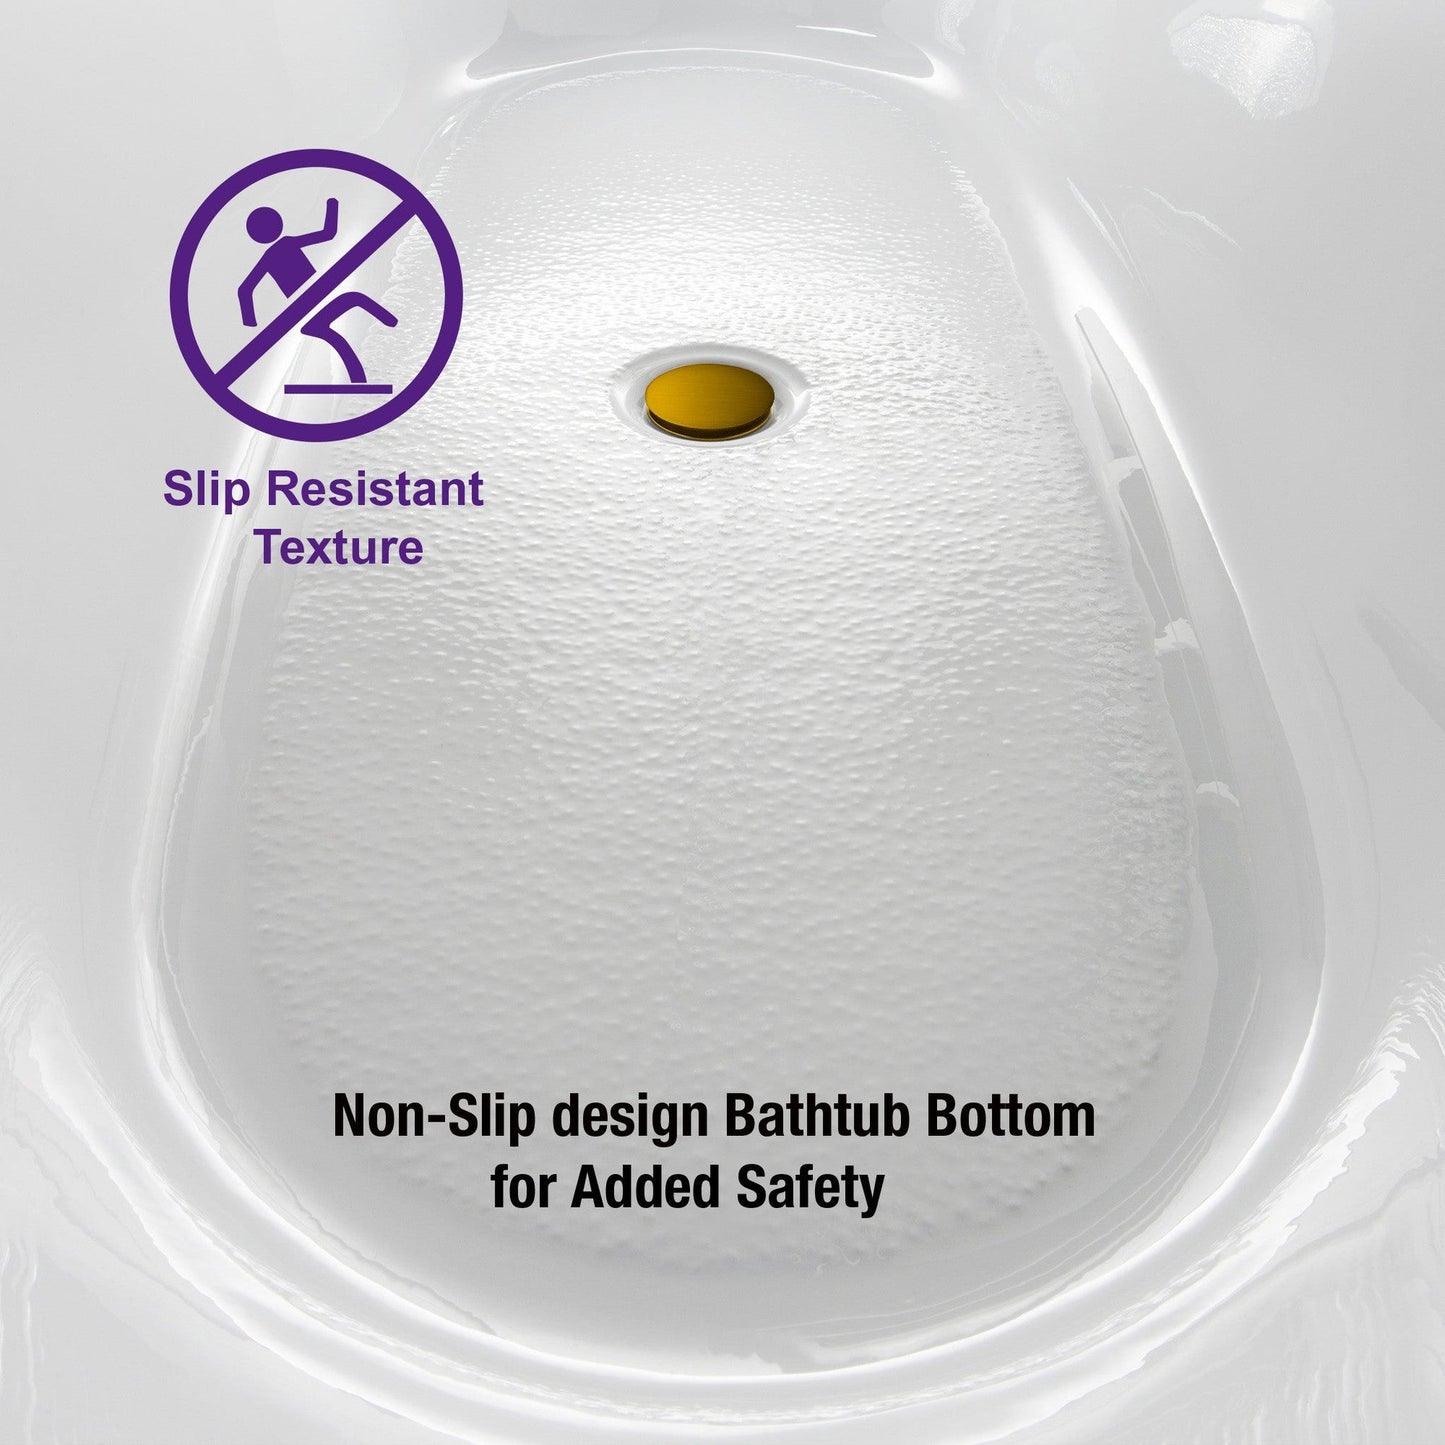 WoodBridge B1538 71" White Acrylic Freestanding Soaking Bathtub With Brushed Gold Overflow and Drain